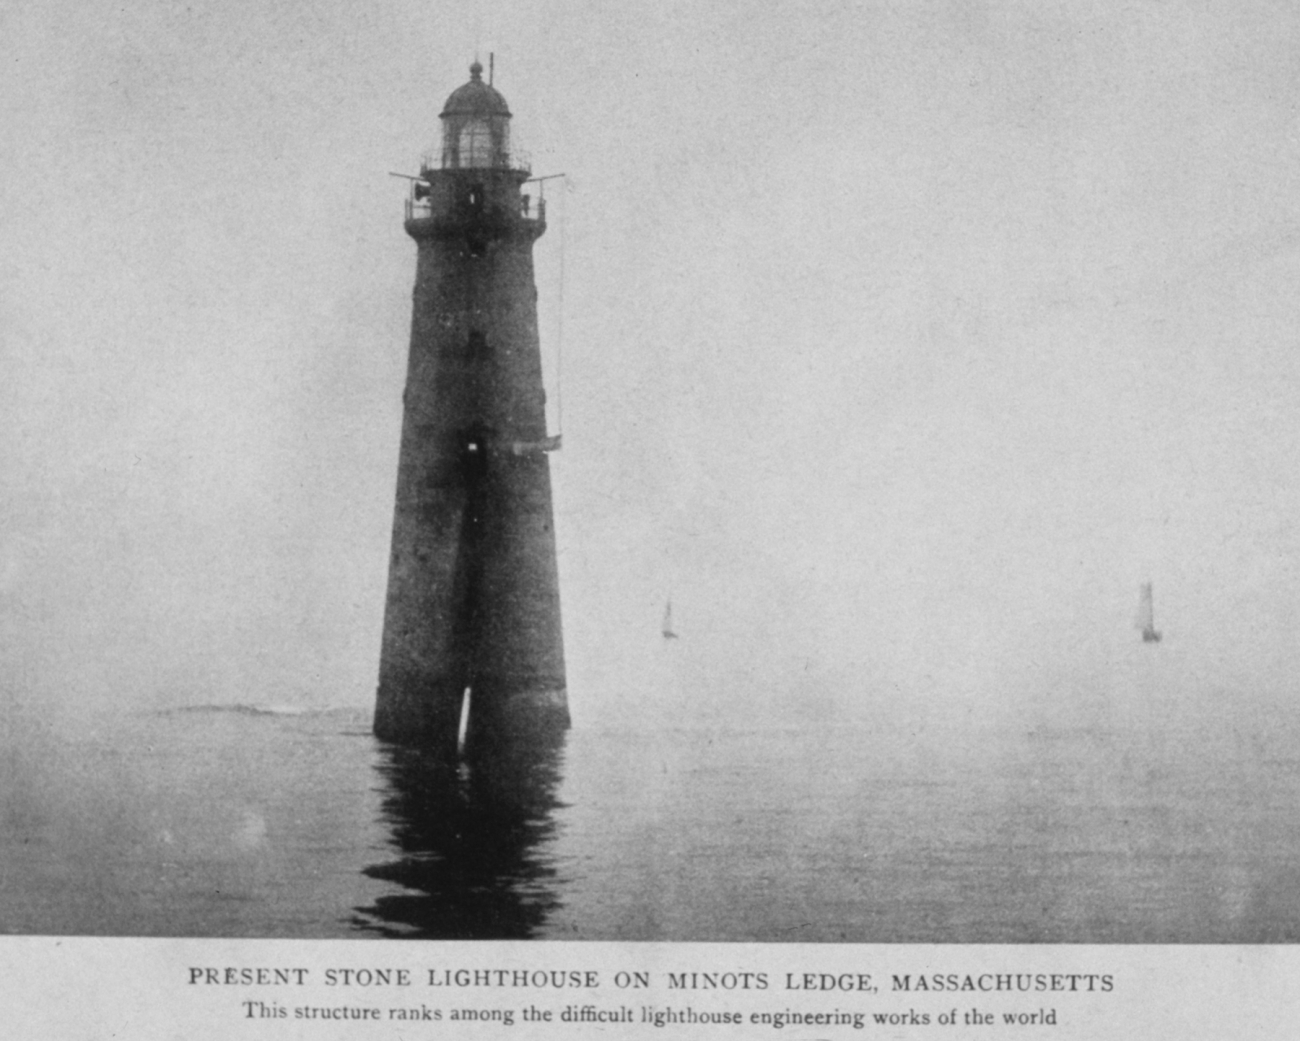 Present Stone Lighthouse on Minots Ledge, Massachusetts